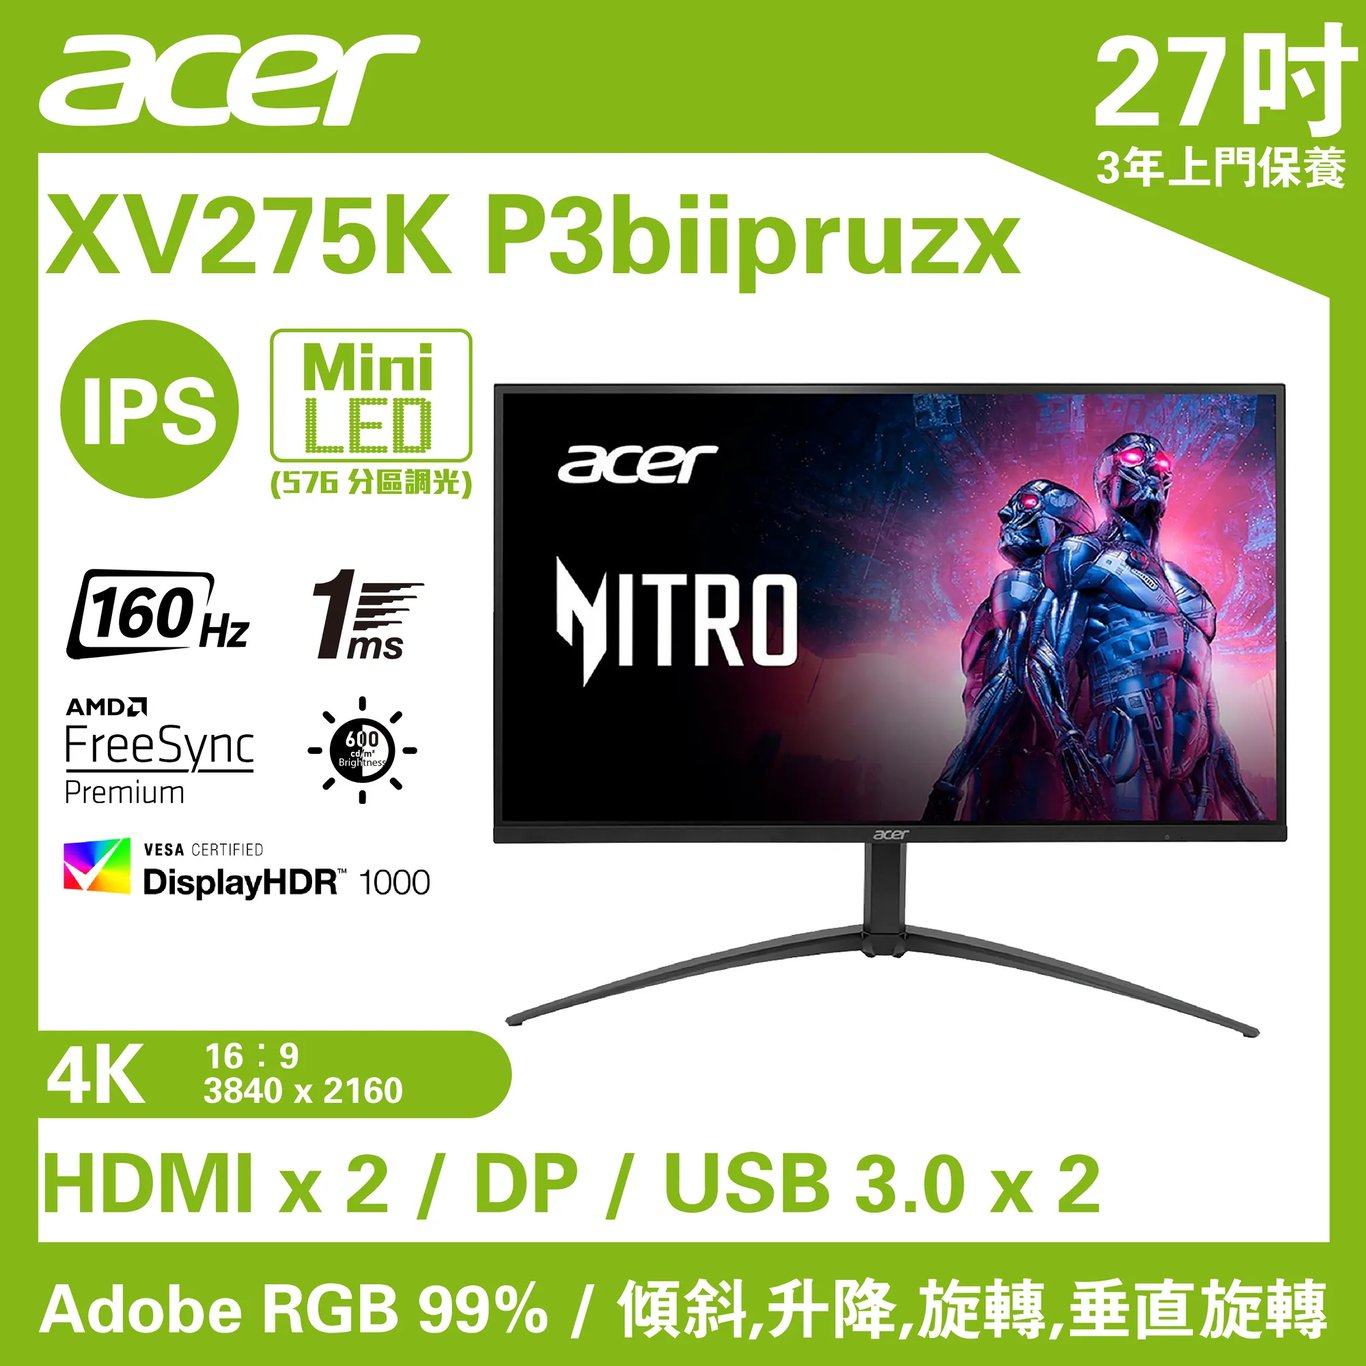 Acer NITRO XV275K P3biipruzx 電競顯示器